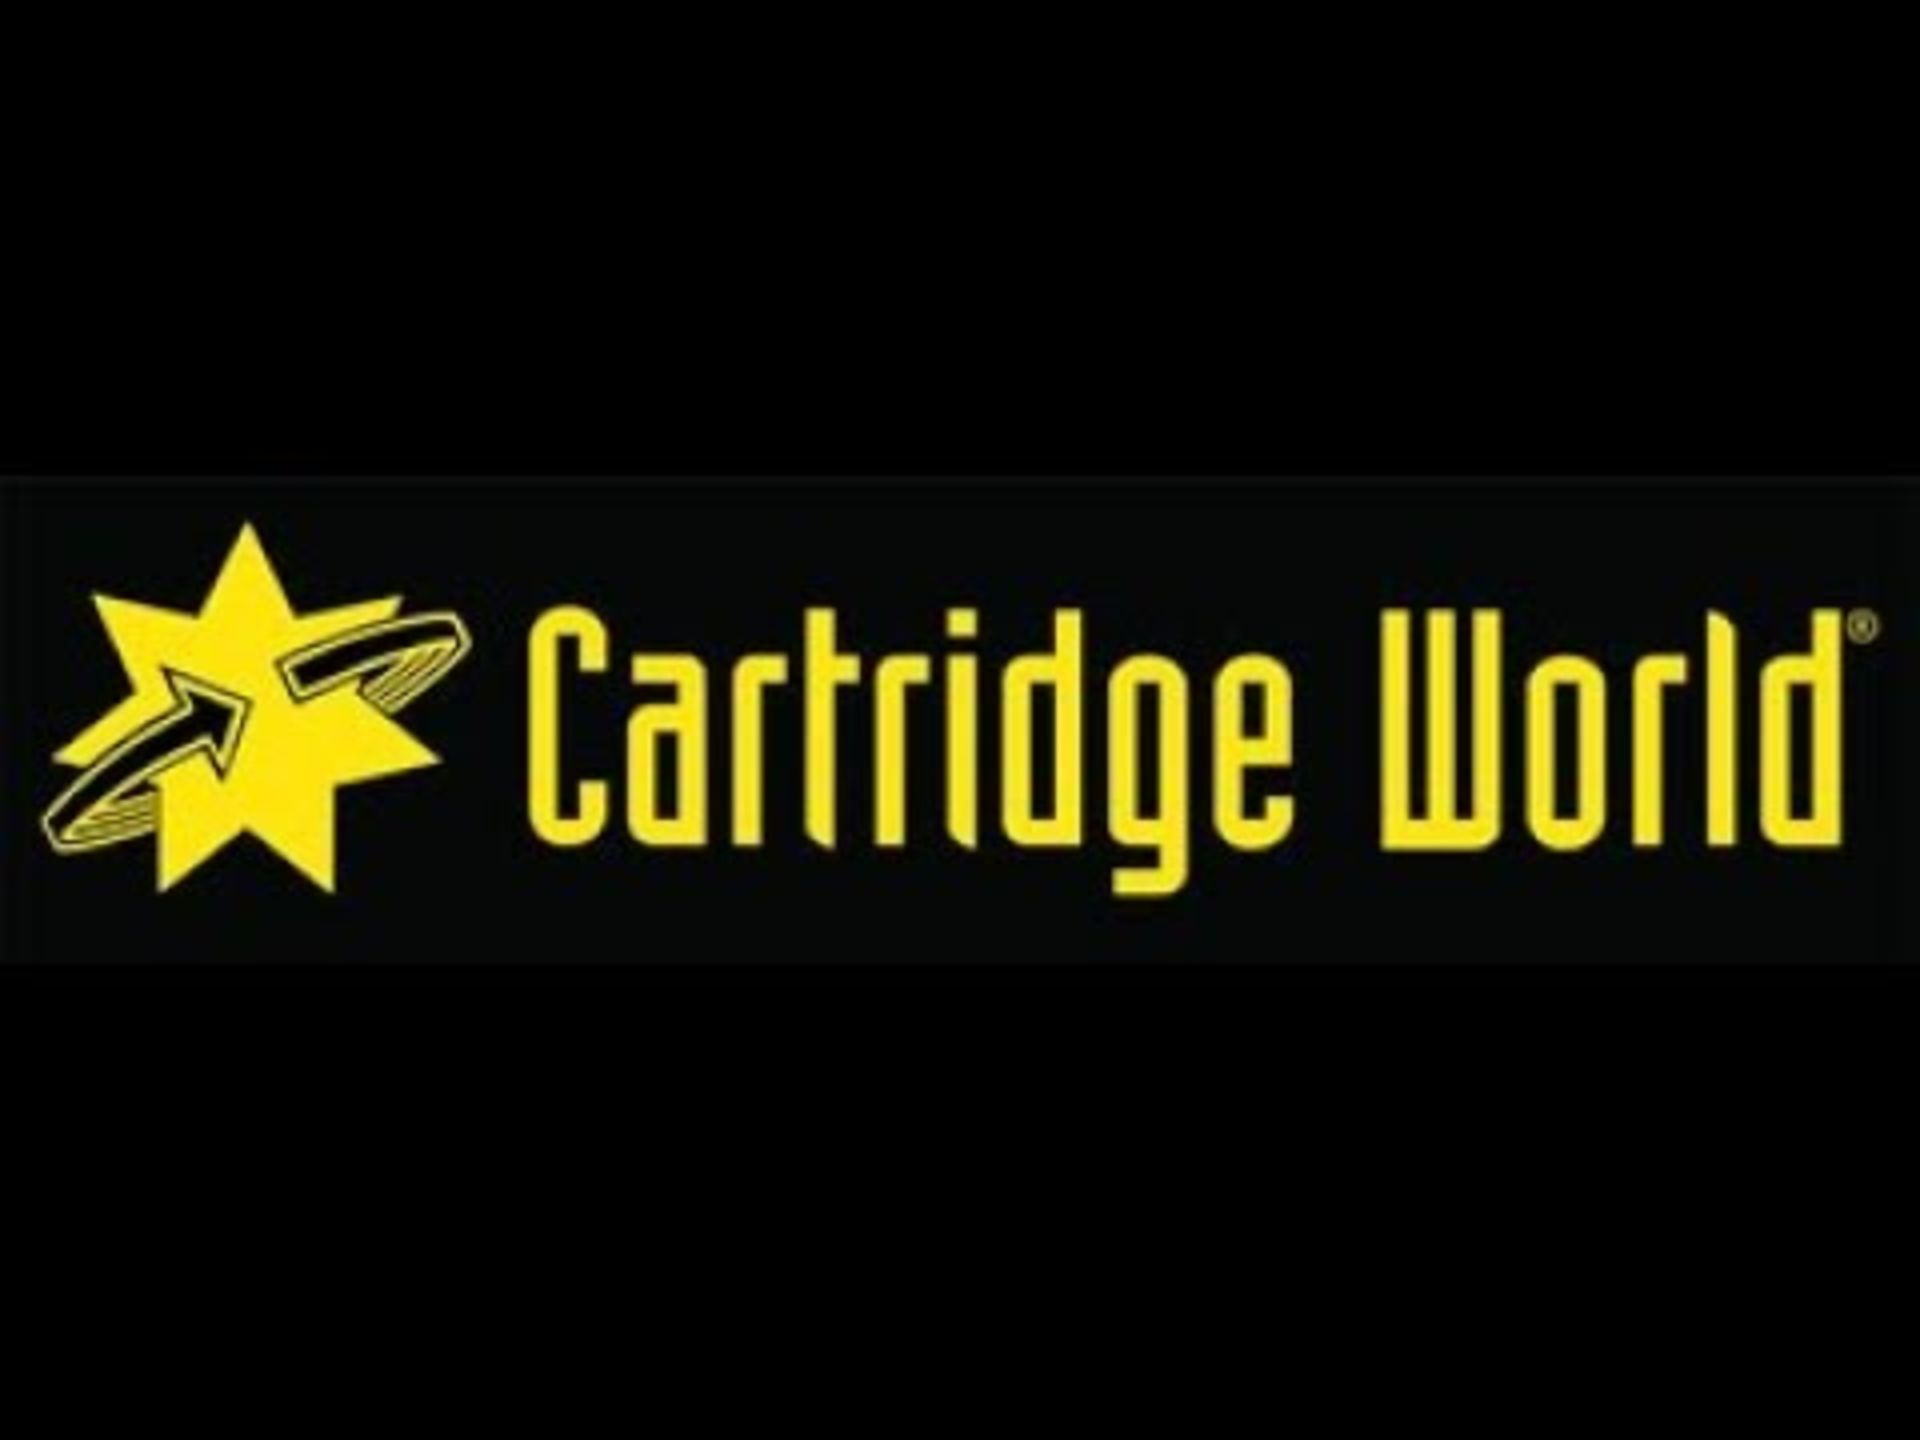 Cartridge world toners and ink cartridges bulk joblot rrp £1,984.56 - Image 2 of 6